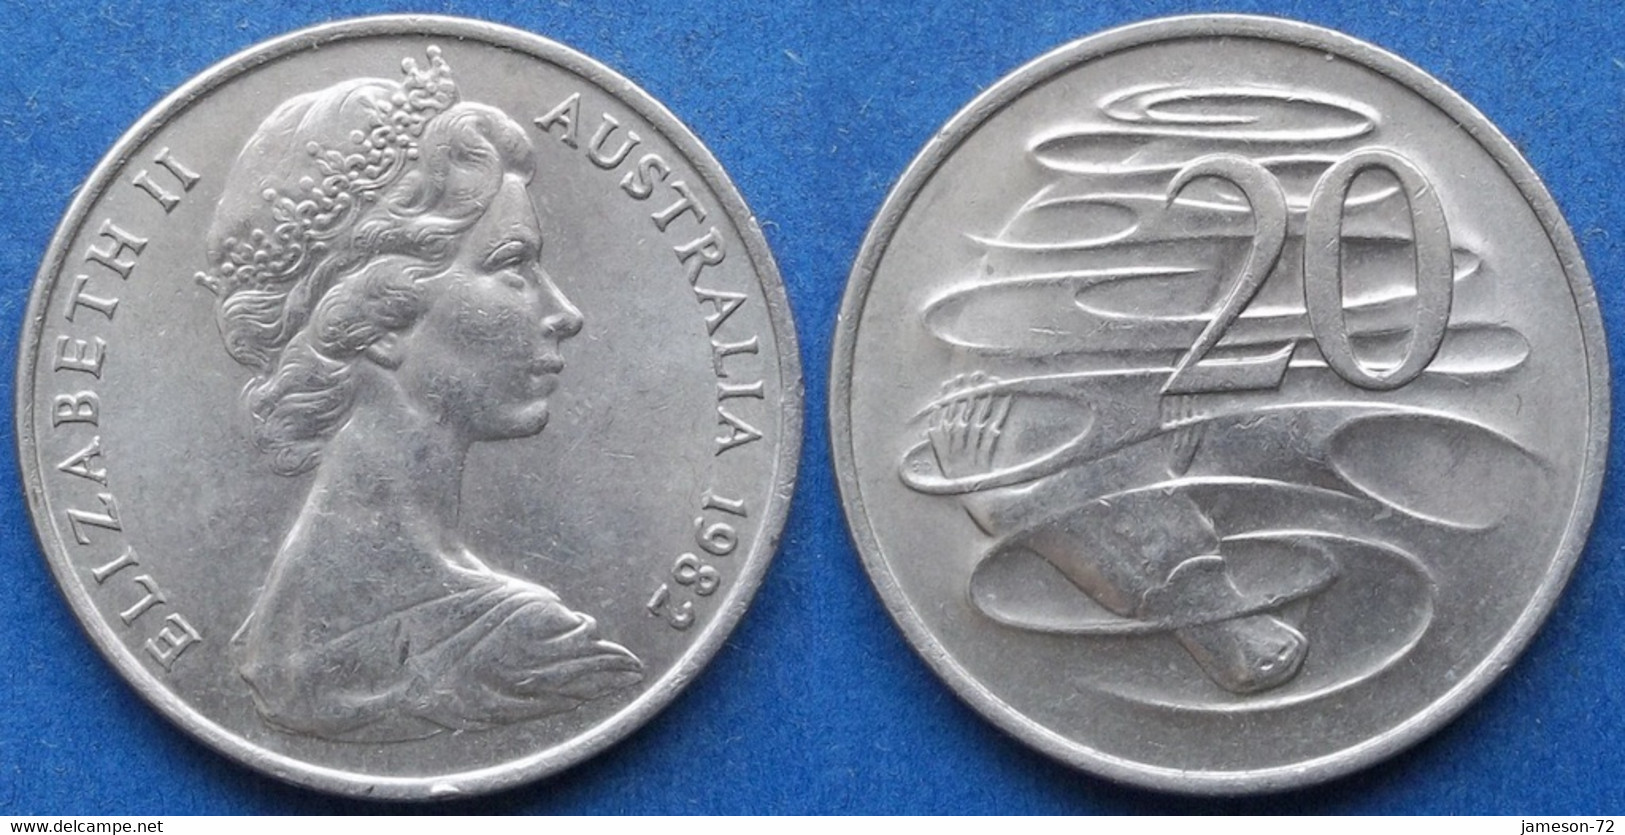 AUSTRALIA - 20 Cents 1982 "duckbill Platypus" KM# 66 Elizabeth II Decimal Coinage (1971-2022) - Edelweiss Coins - 20 Cents